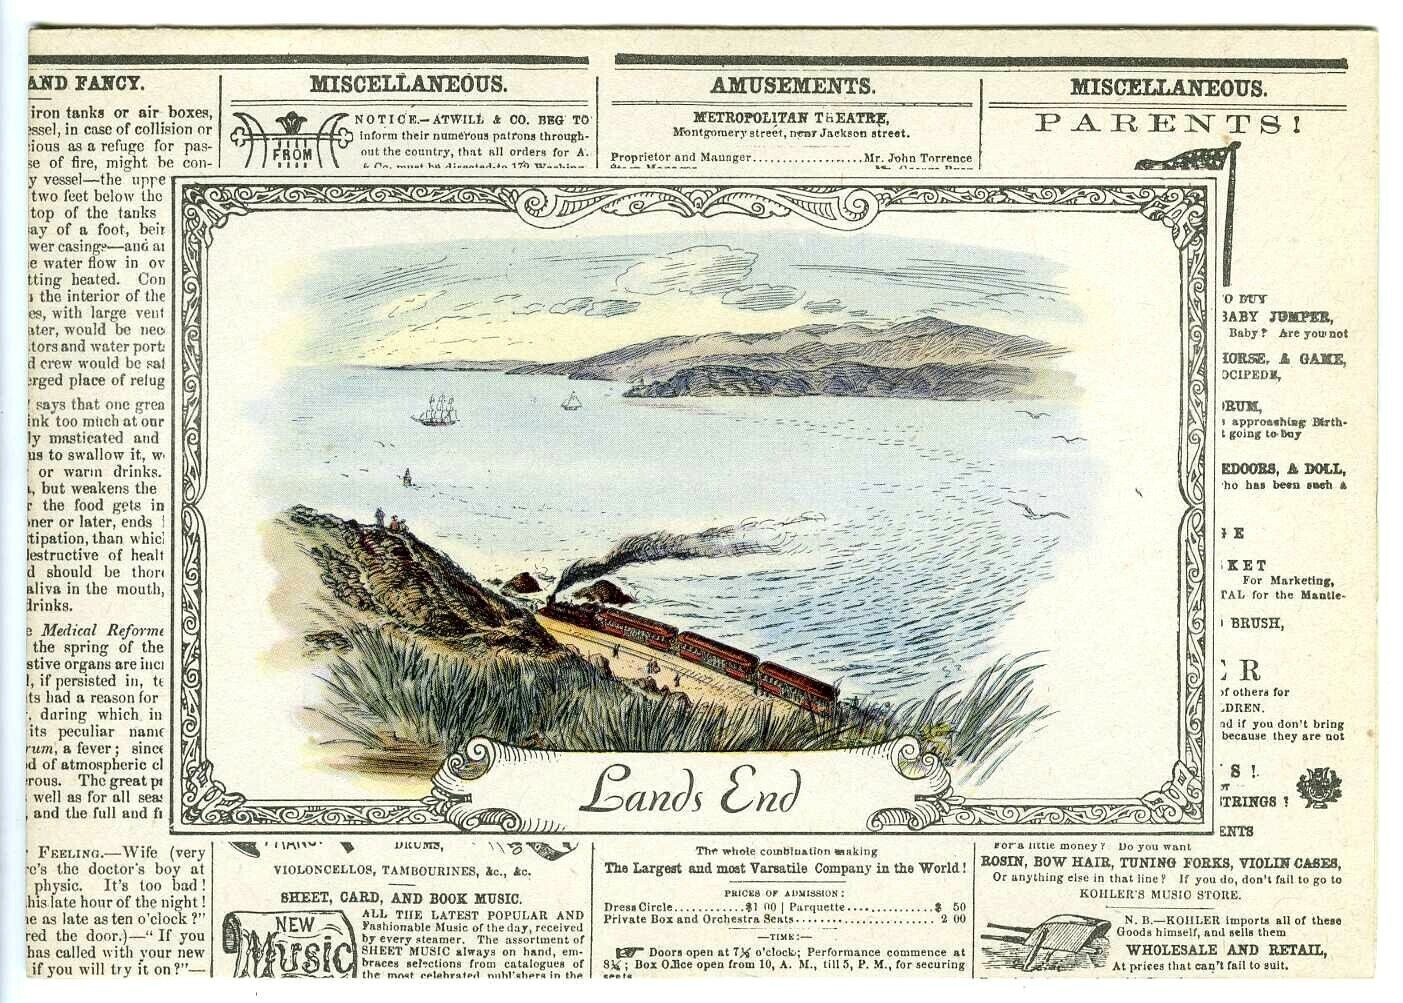 c.1880s SAN FRANCISCO LANDS END RAILROAD TRAIN & GOLDEN GATE~NEW 1980 NOTE CARD